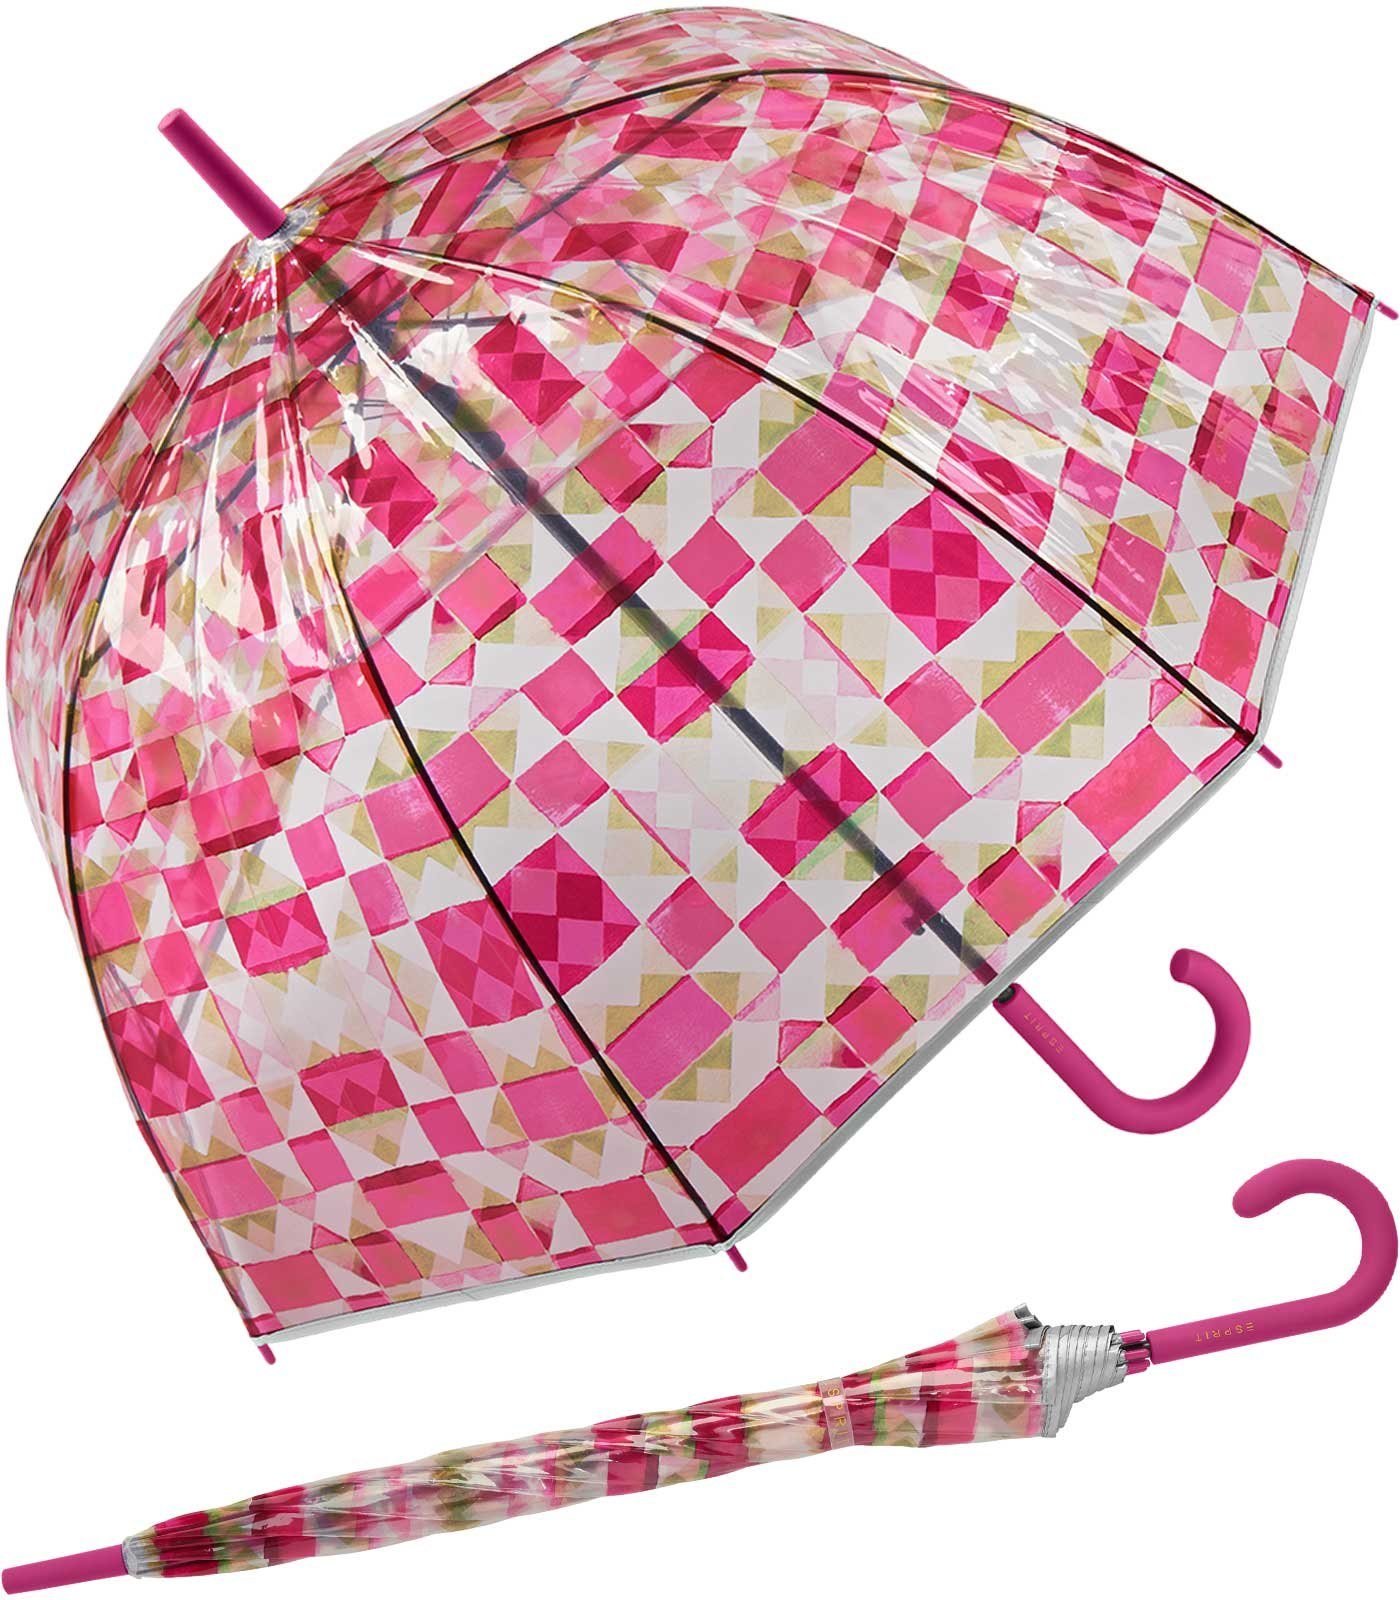 mit transparent, Langregenschirm pinkfarbenen Vierecken Automatik-Glockenschirm farbenfroh Esprit Kaleidoscope bedruckt